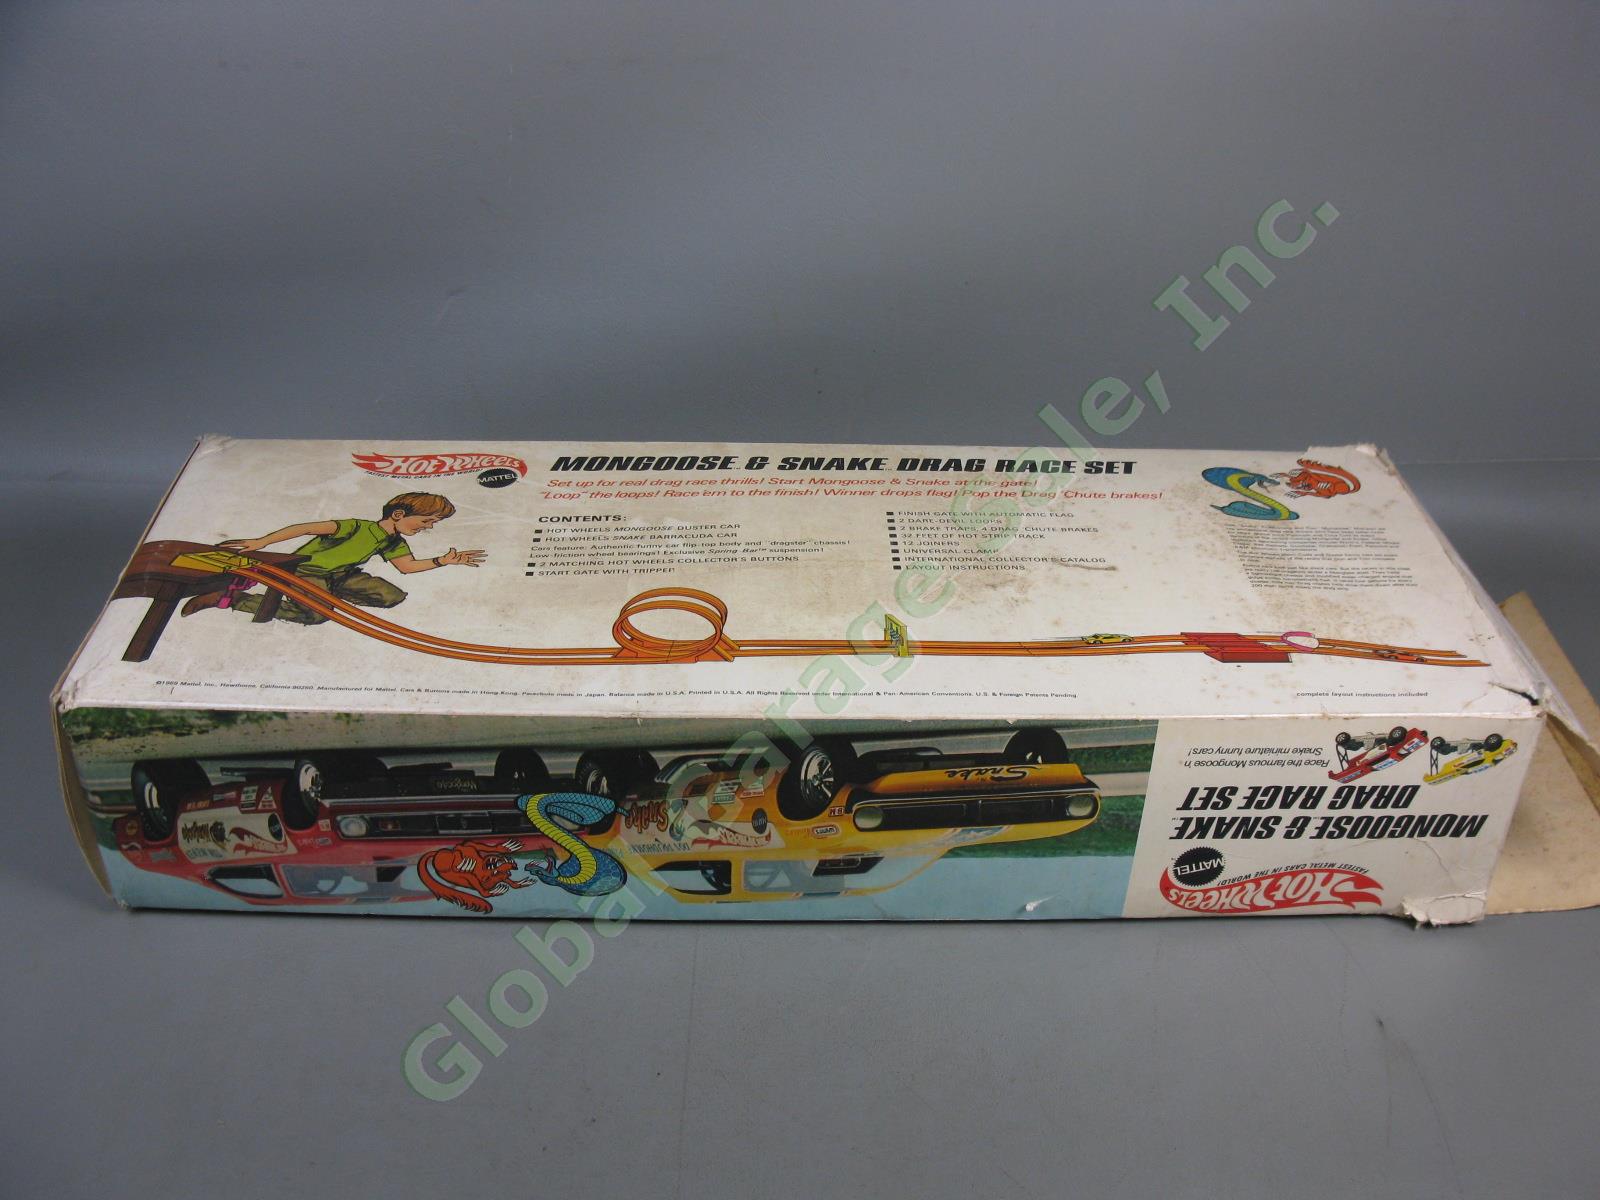 Vtg 1969 Mattel Hot Wheels Redline Mongoose & Snake Funny Car Drag Race Set 6438 1